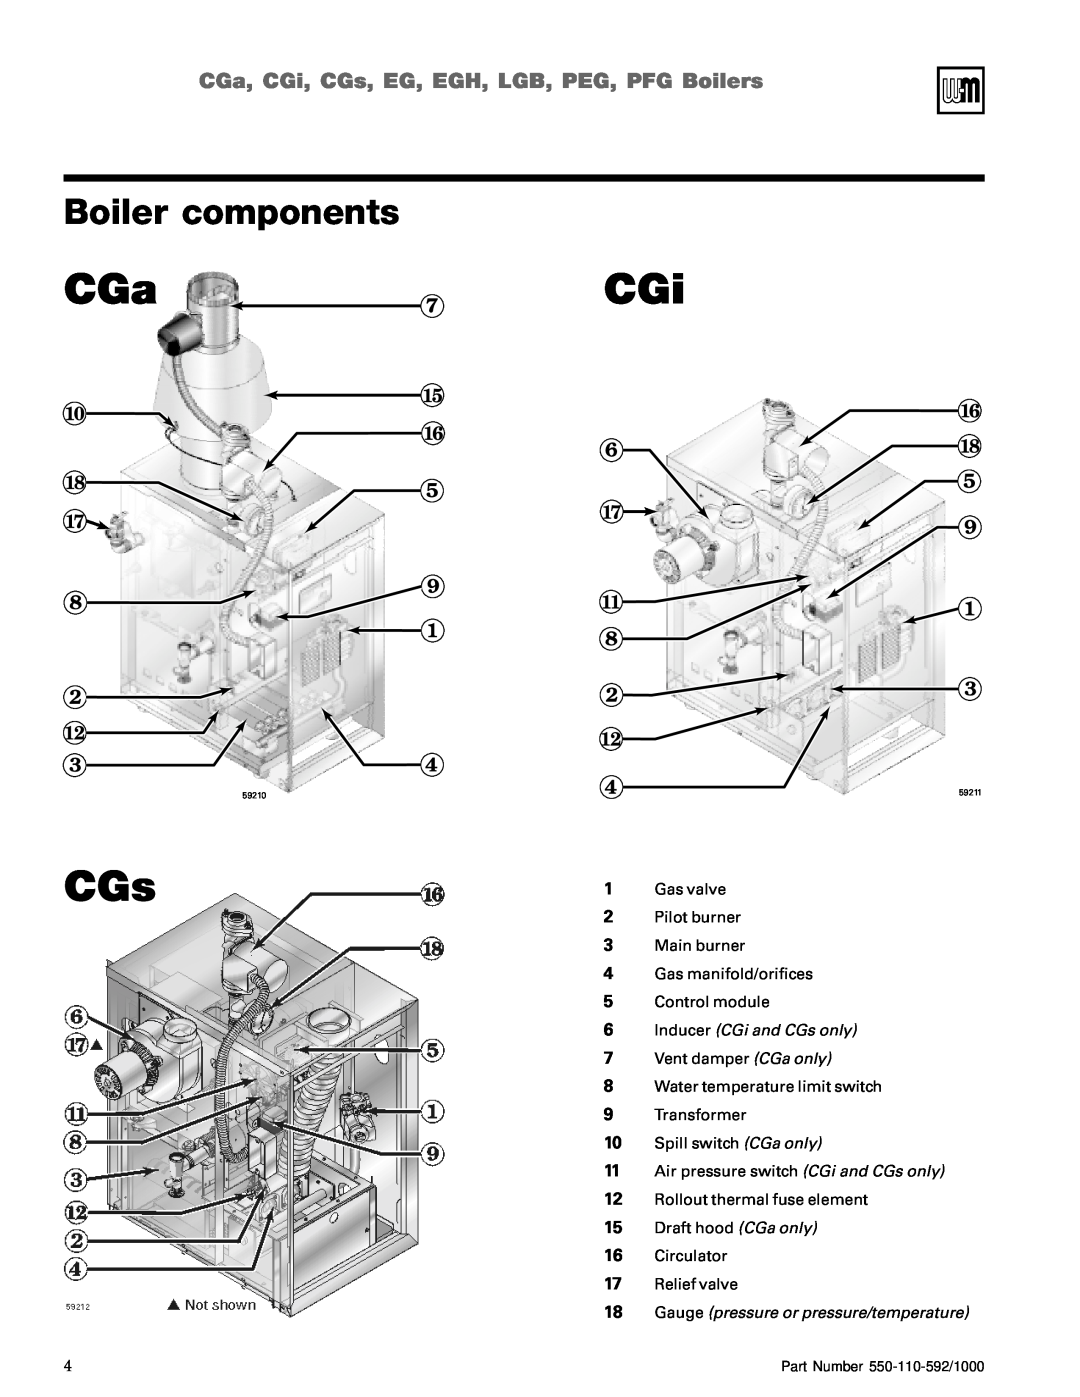 Weil-McLain manual Boiler components, CGa,CGi,CGs,EG,EGH,LGB,PEG,PFGBoilers, Inducer CGi and CGs only 